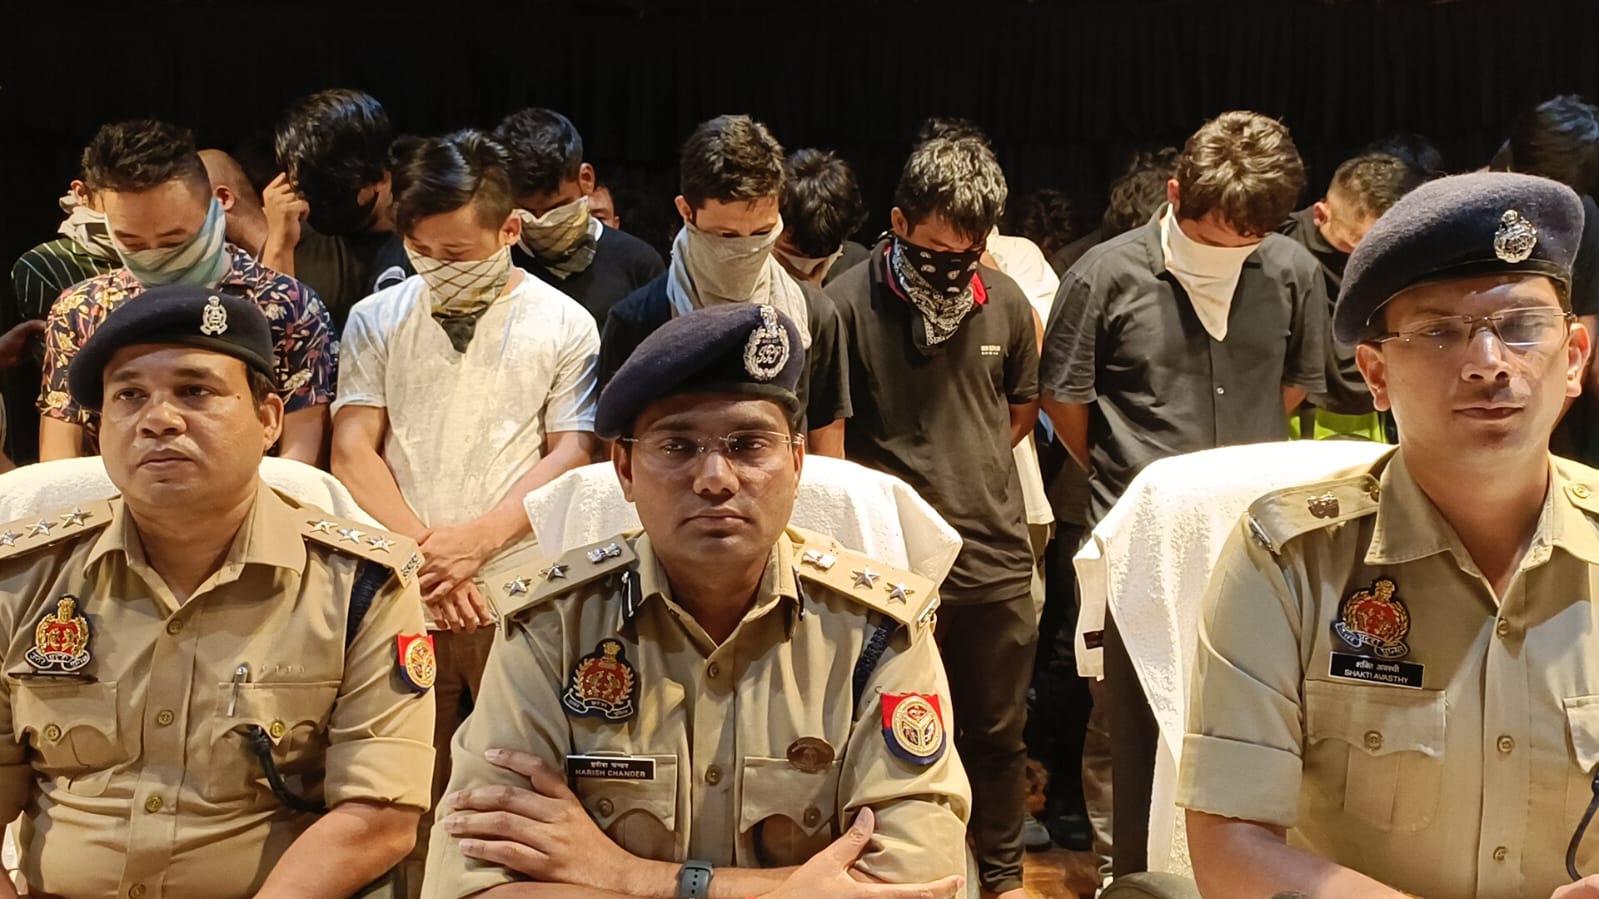 Noida Police Good work: 10000-10000 की नौकरी करने वाले गिरफ्तार, मालिक फरार, एक ही रात मे करते थे 30 लाख की ठगी